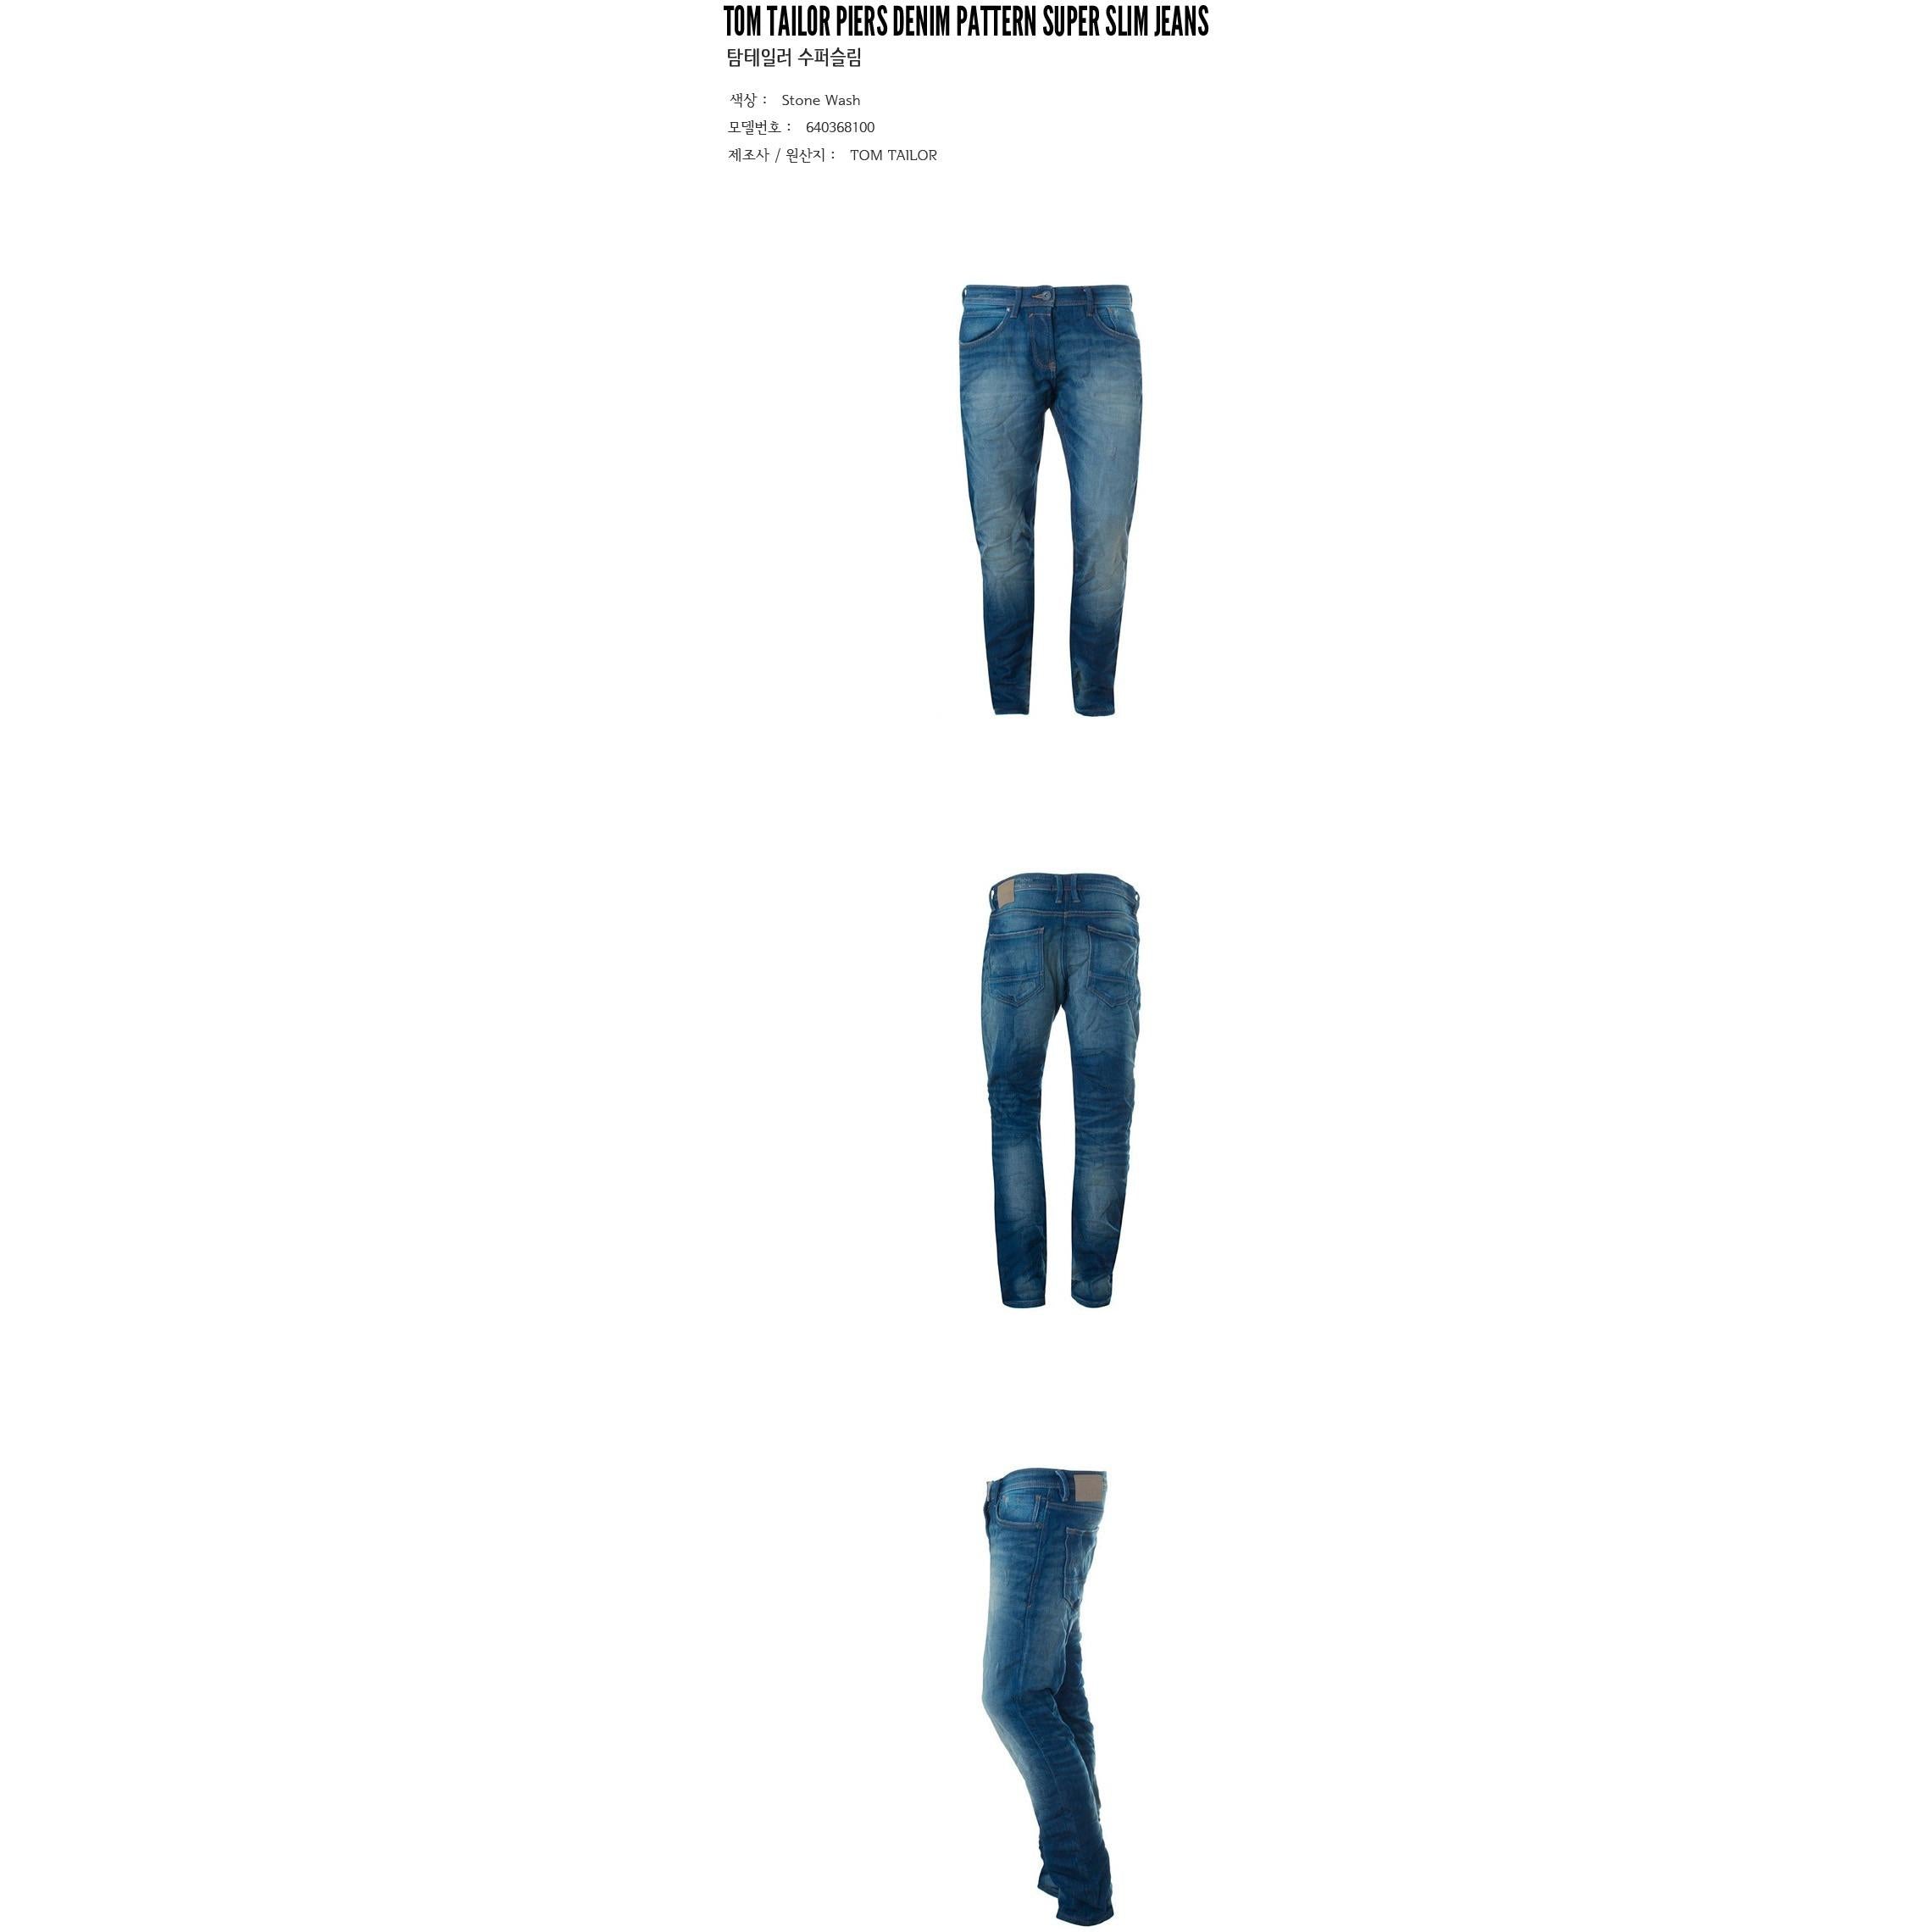 Tom Tailor Men's Piers Denim Pattern Super Slim Jeans Stonewash 640368100.